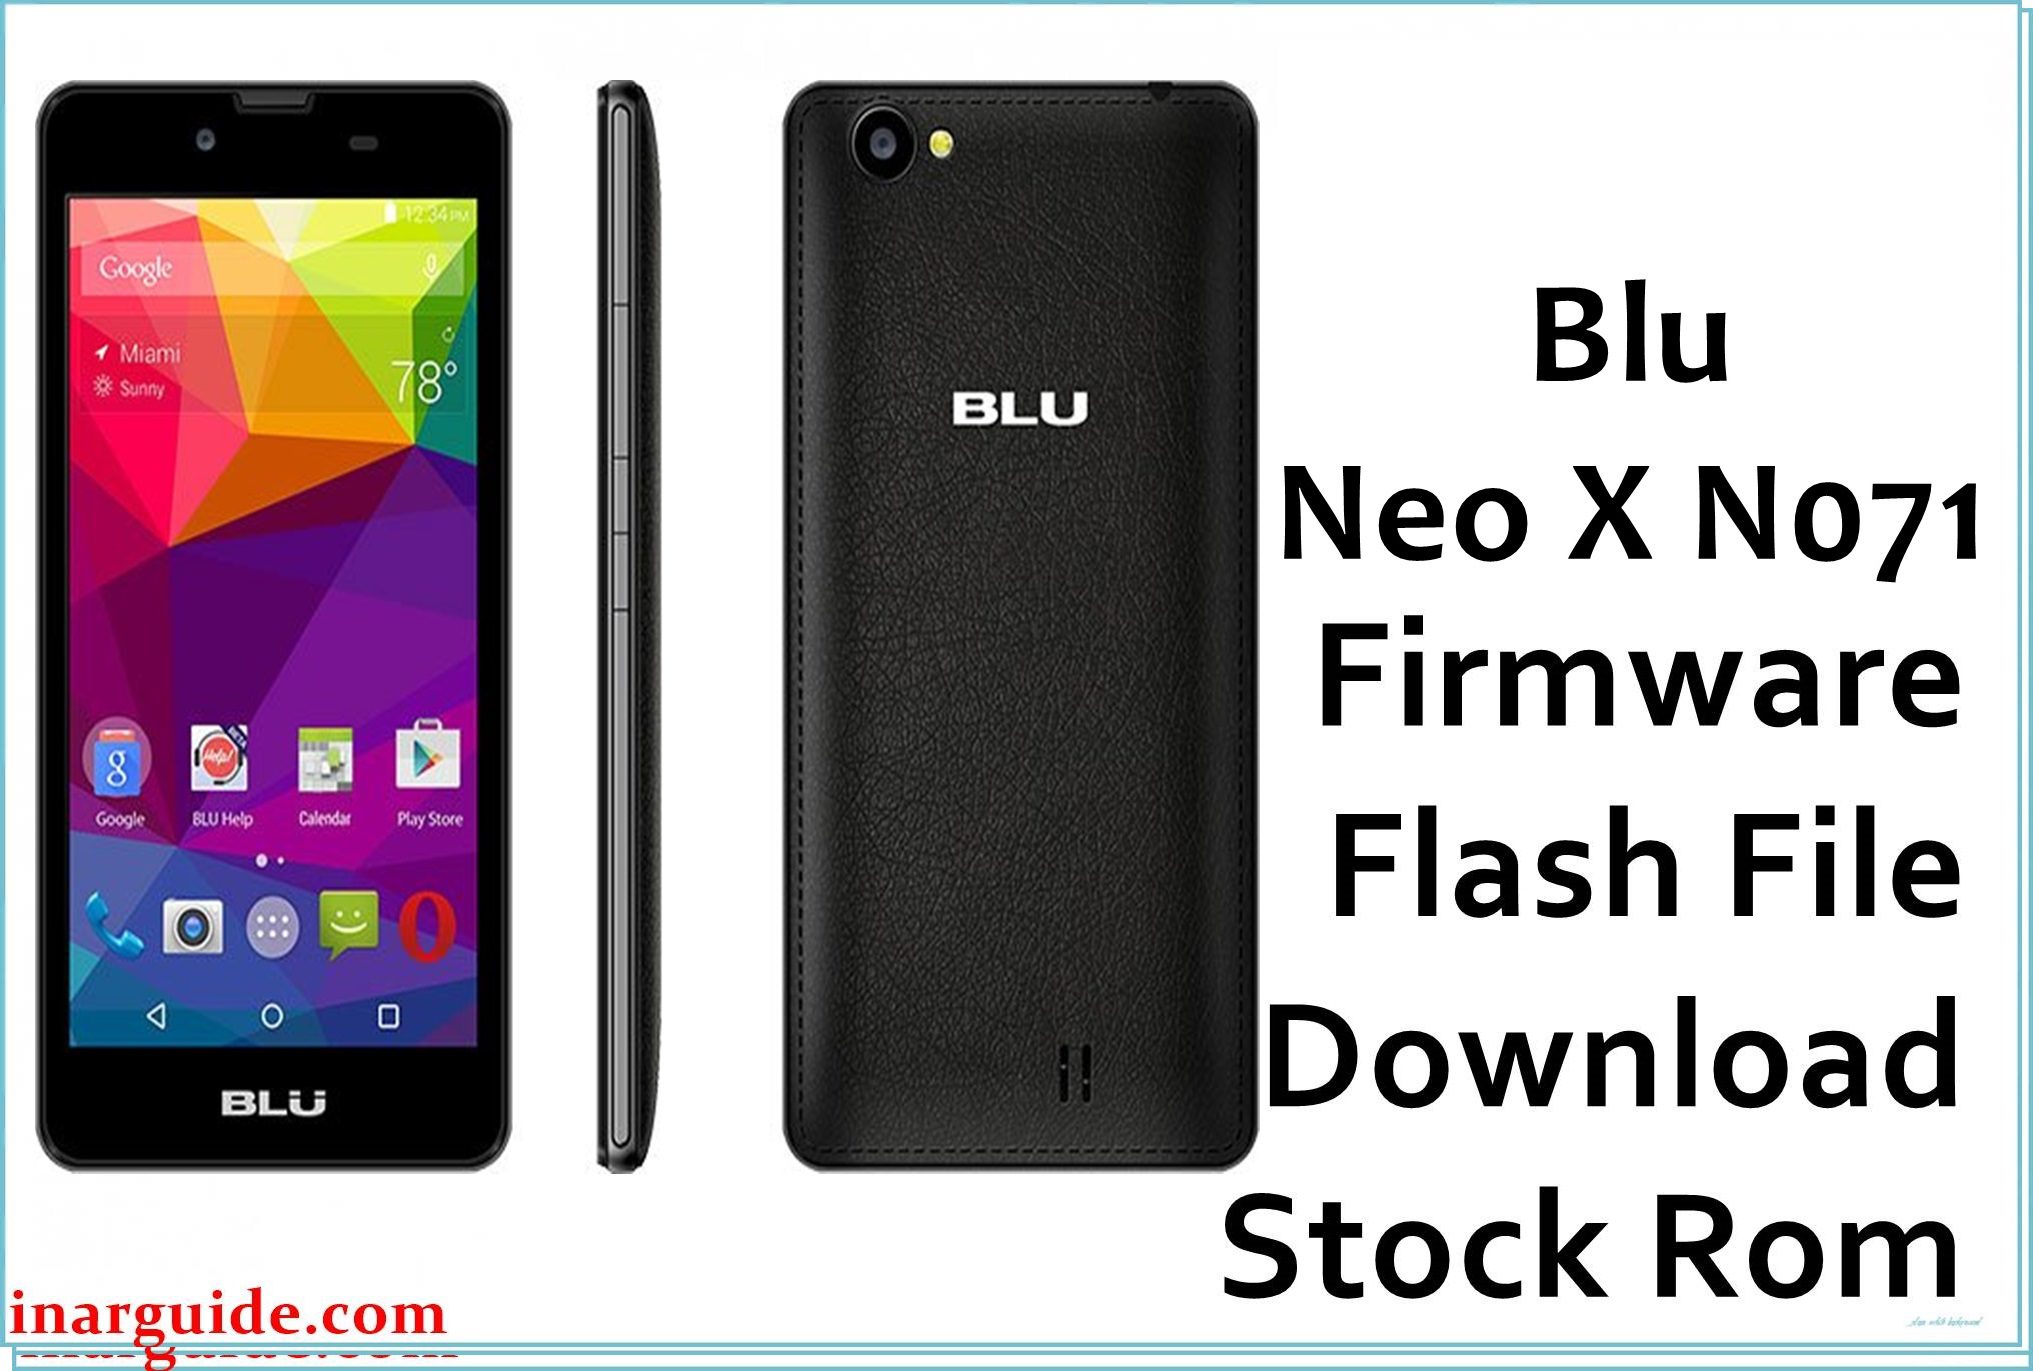 Blu Neo X N071